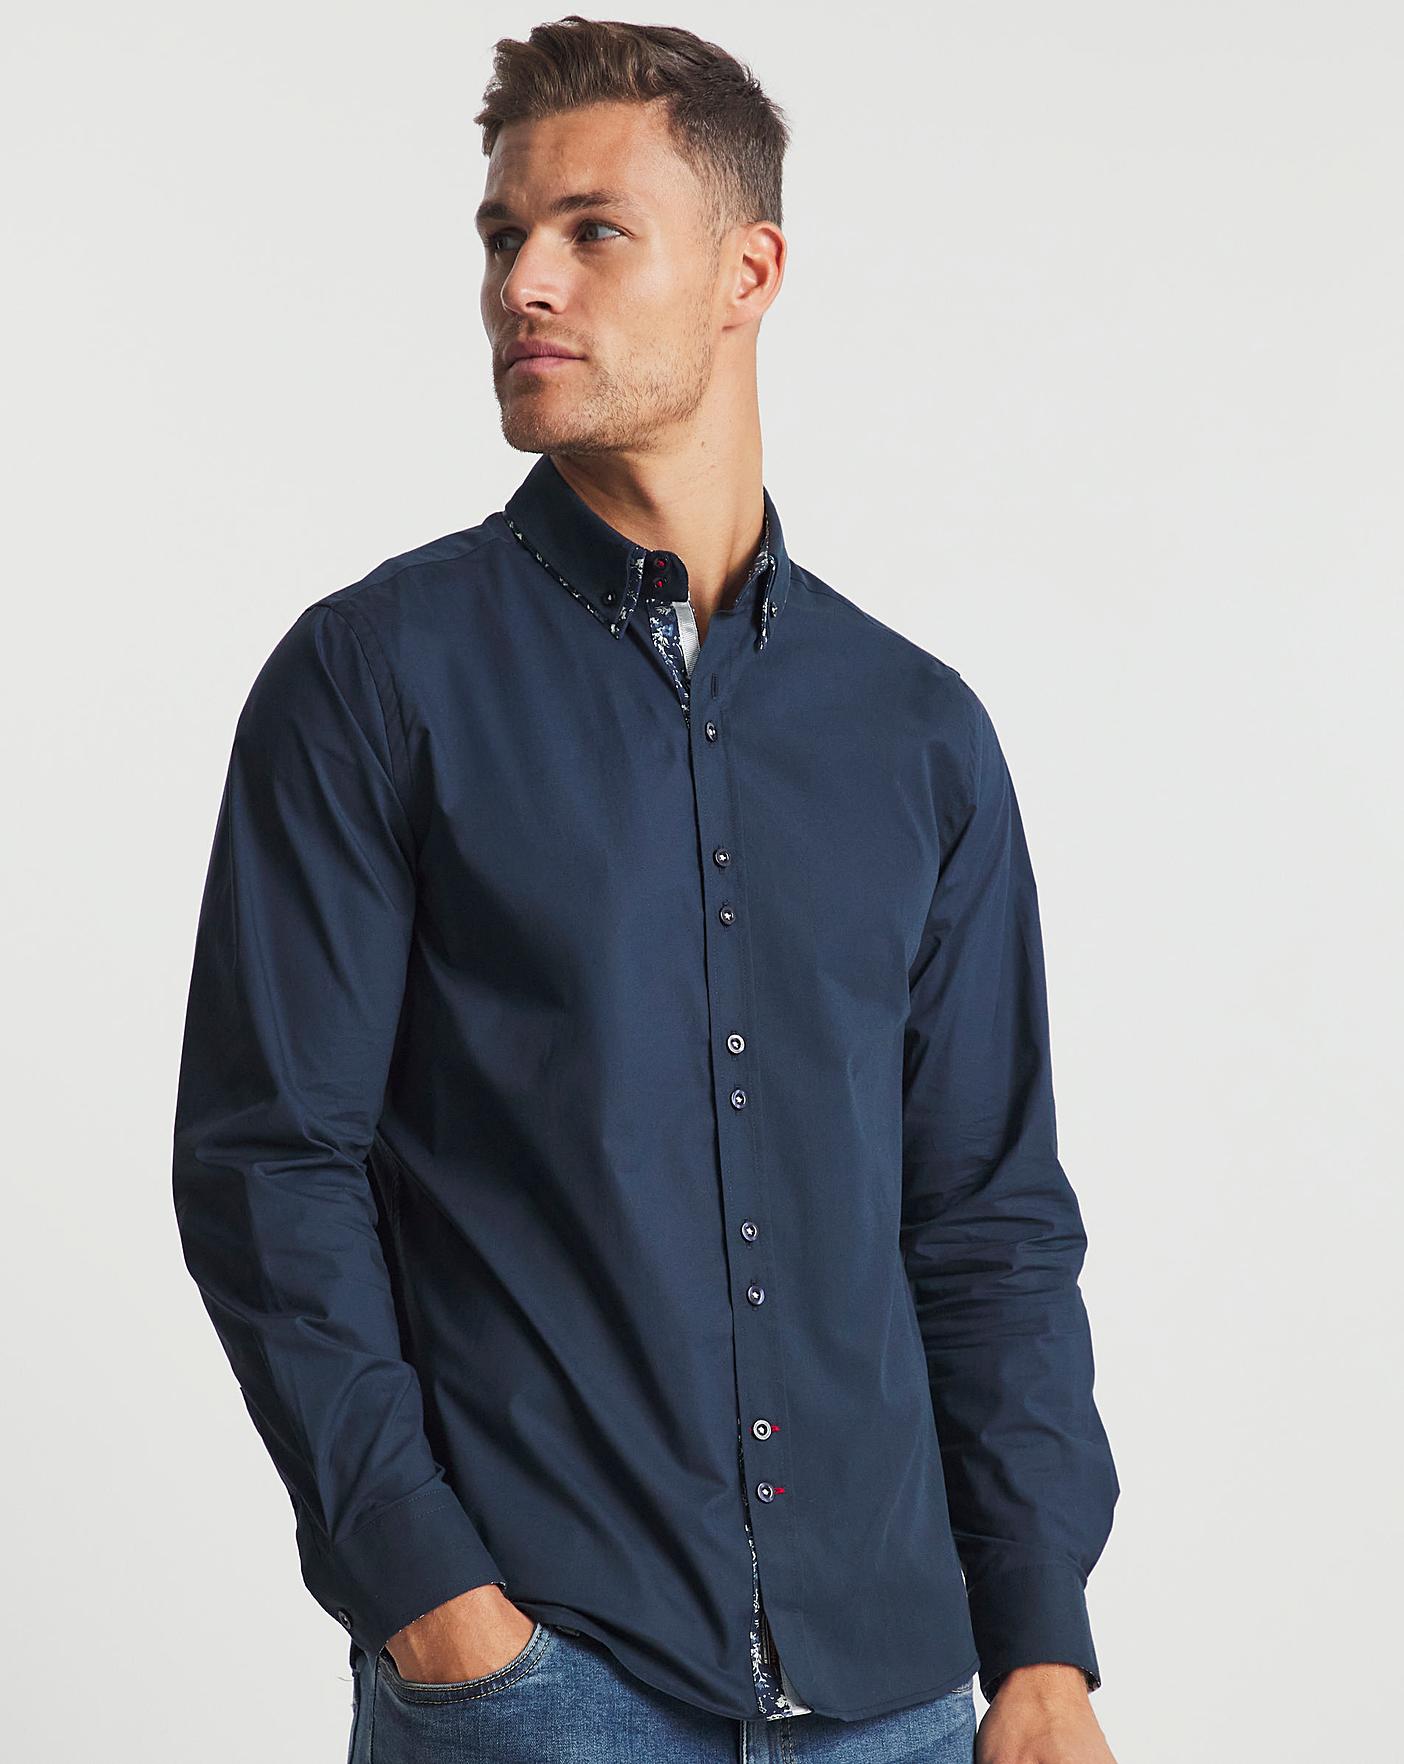 Jacamo Clothing Brand For Men – A Fashion Statement - TopFashionDeals